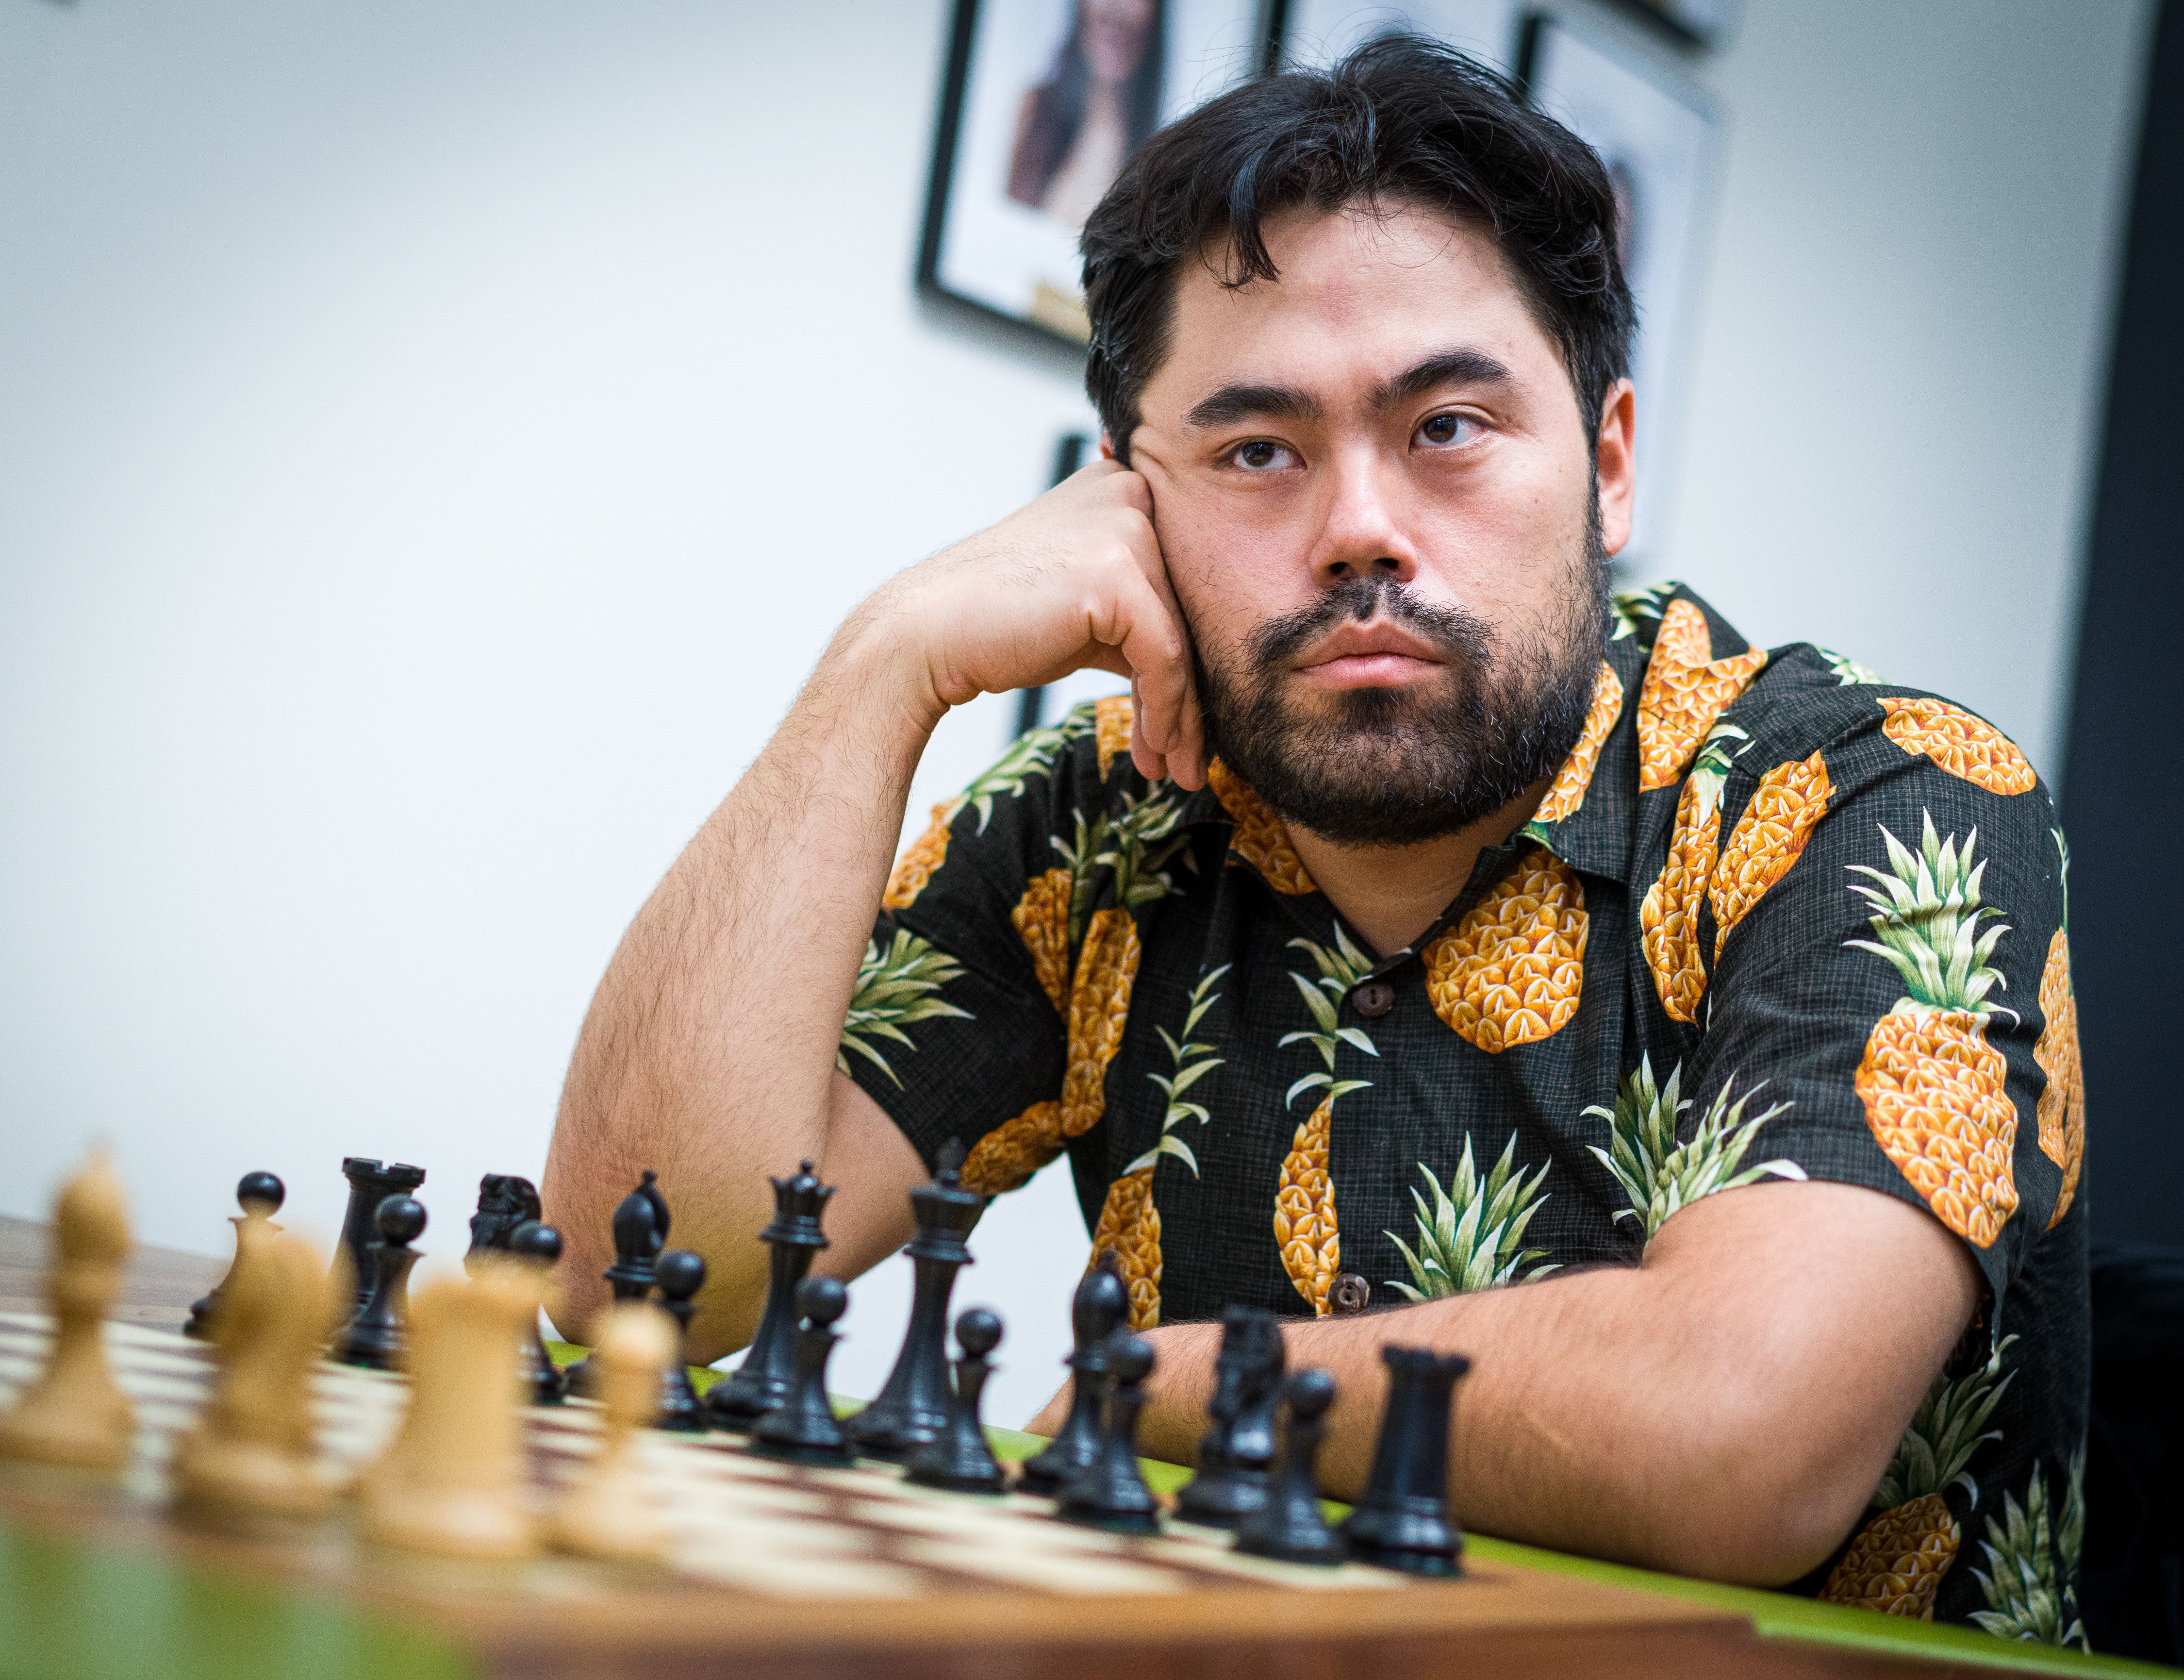 Hikaru Nakamura drops chessbae, apologizes for  strike 